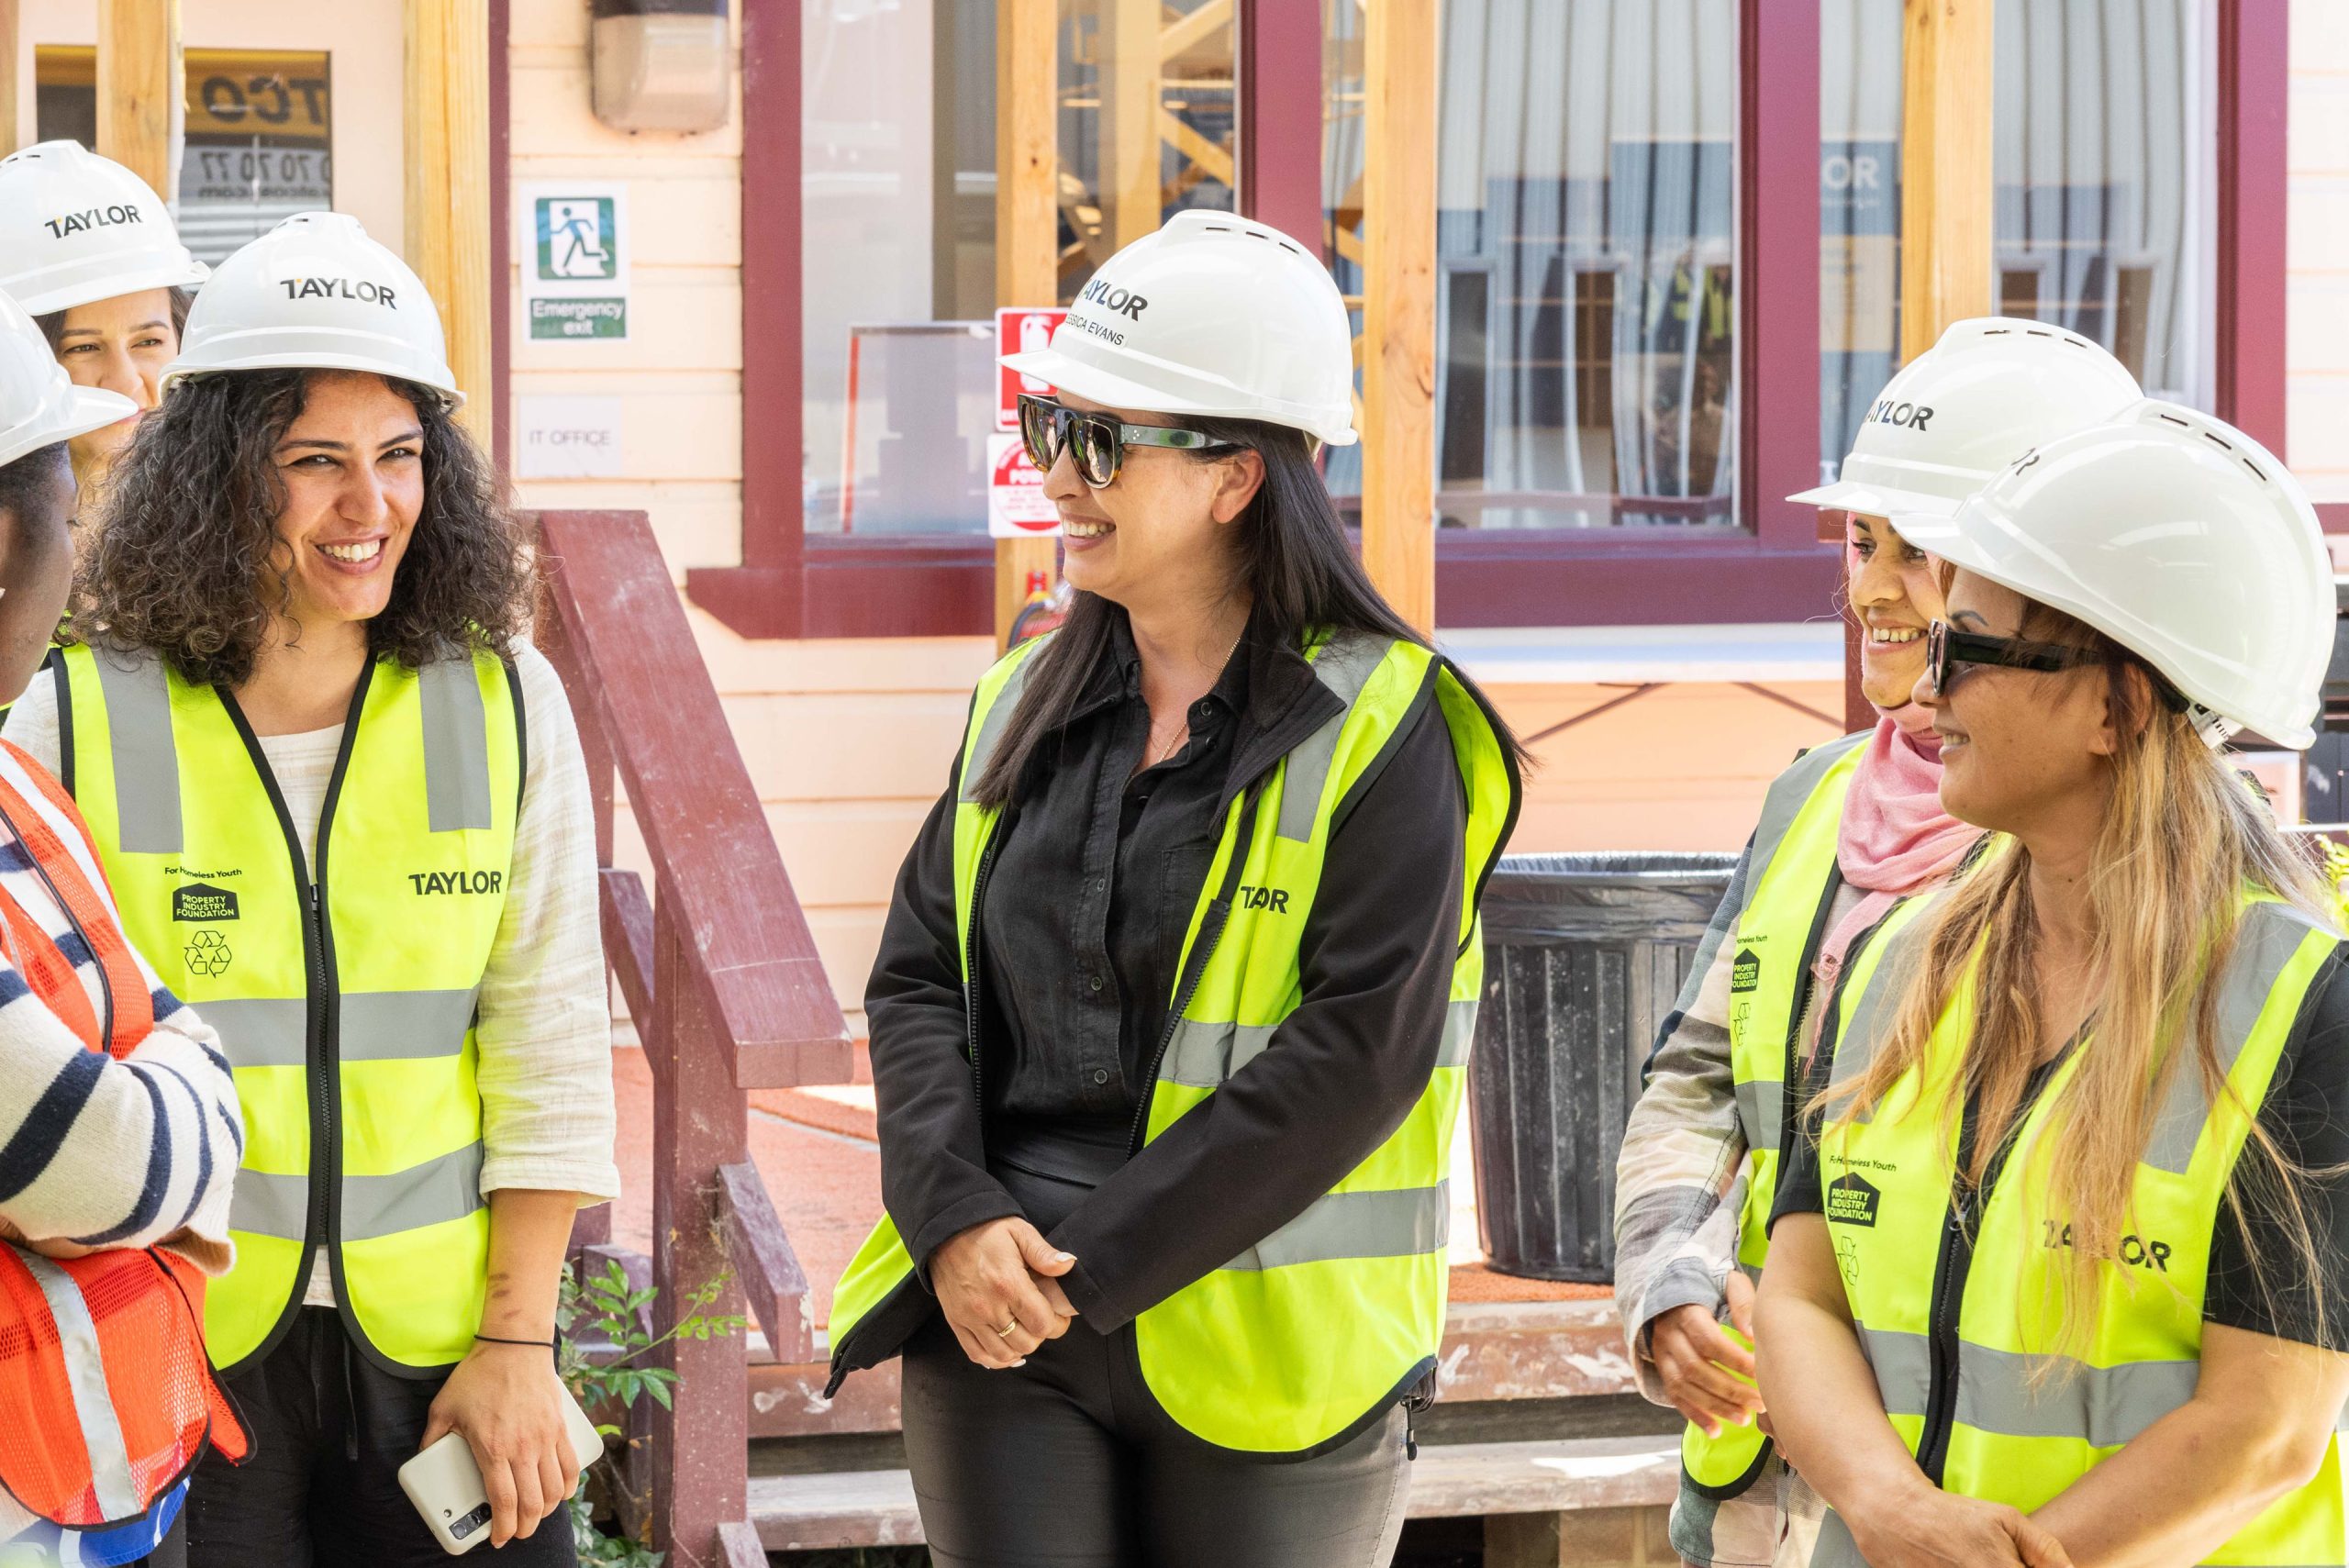 4 women laughing university of newcastle migrant refugee women tour taylor construction education partnership diversity